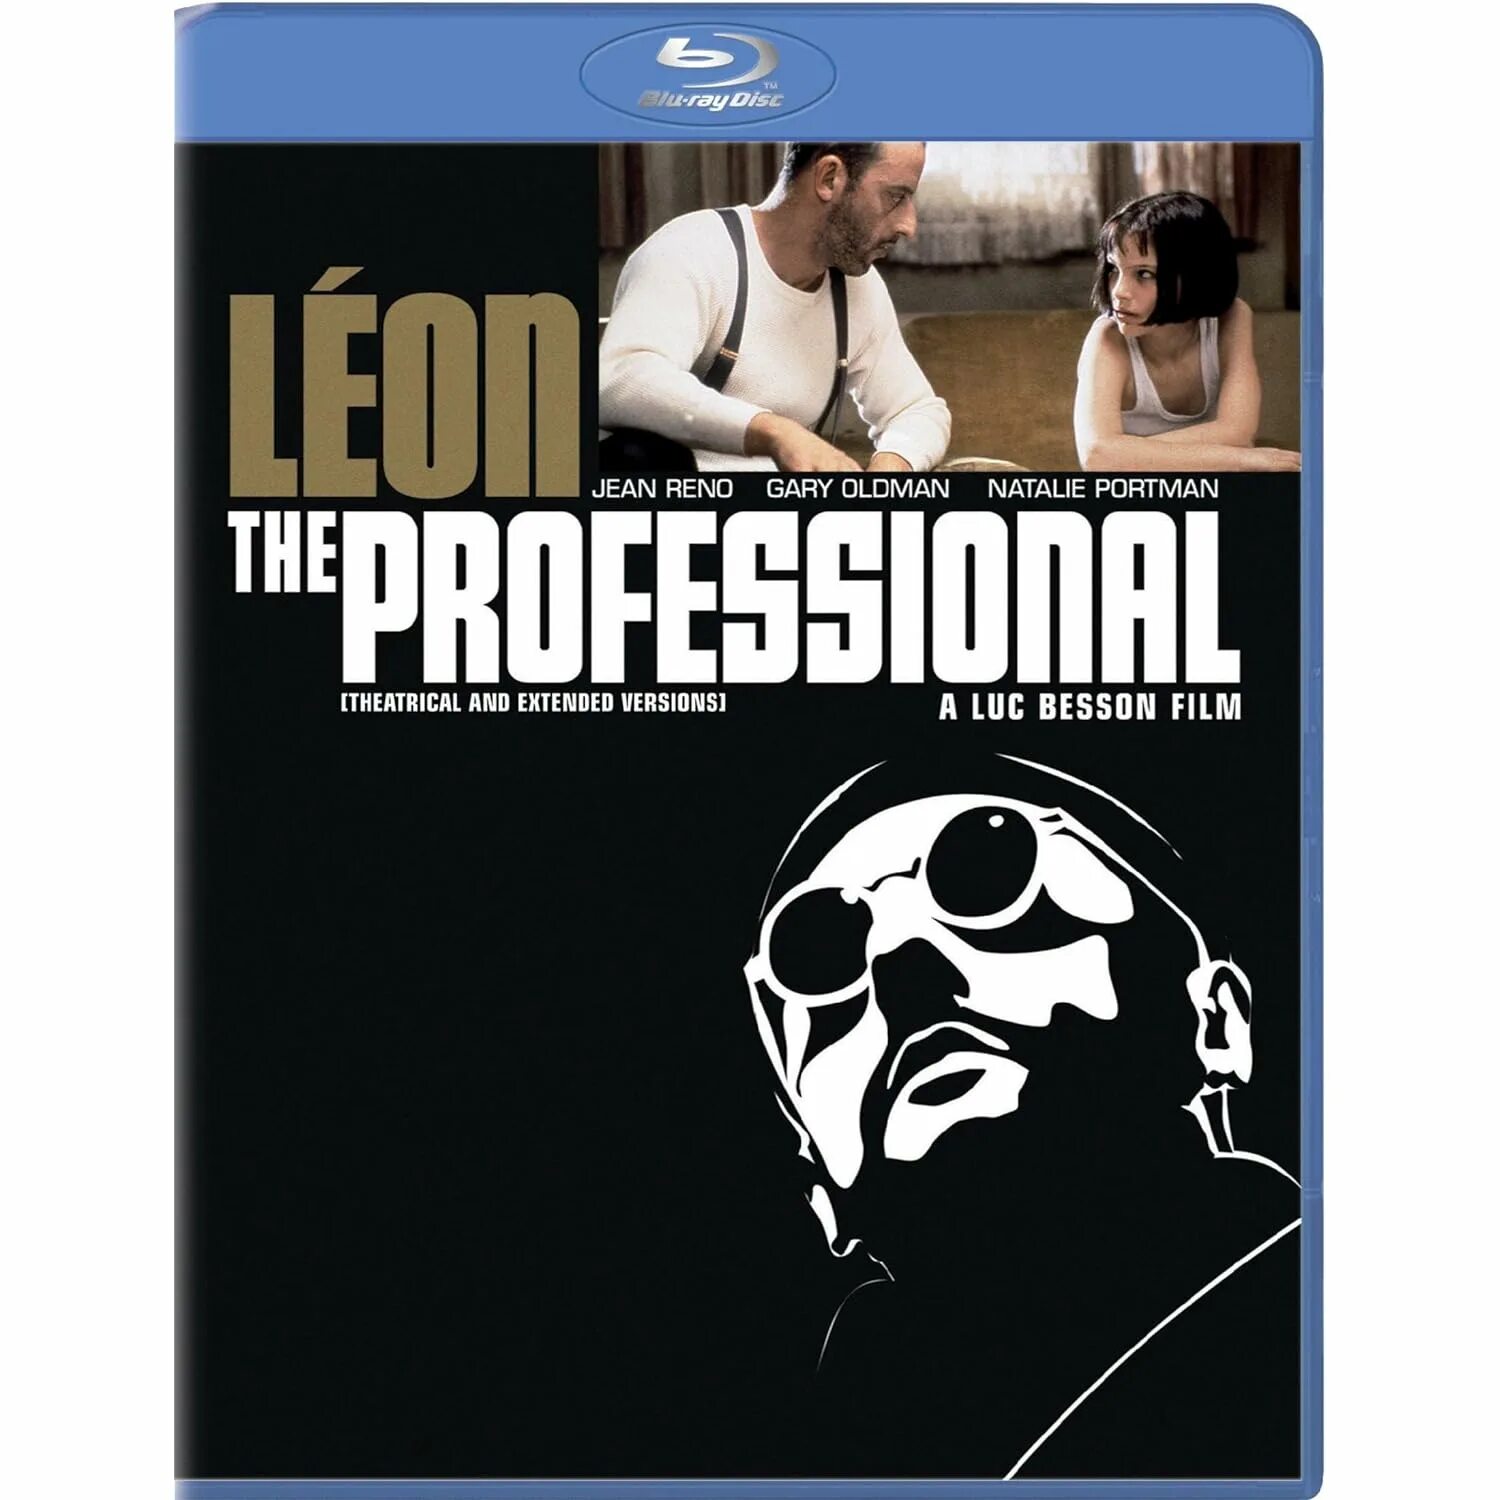 Leon the professional. The professional игра